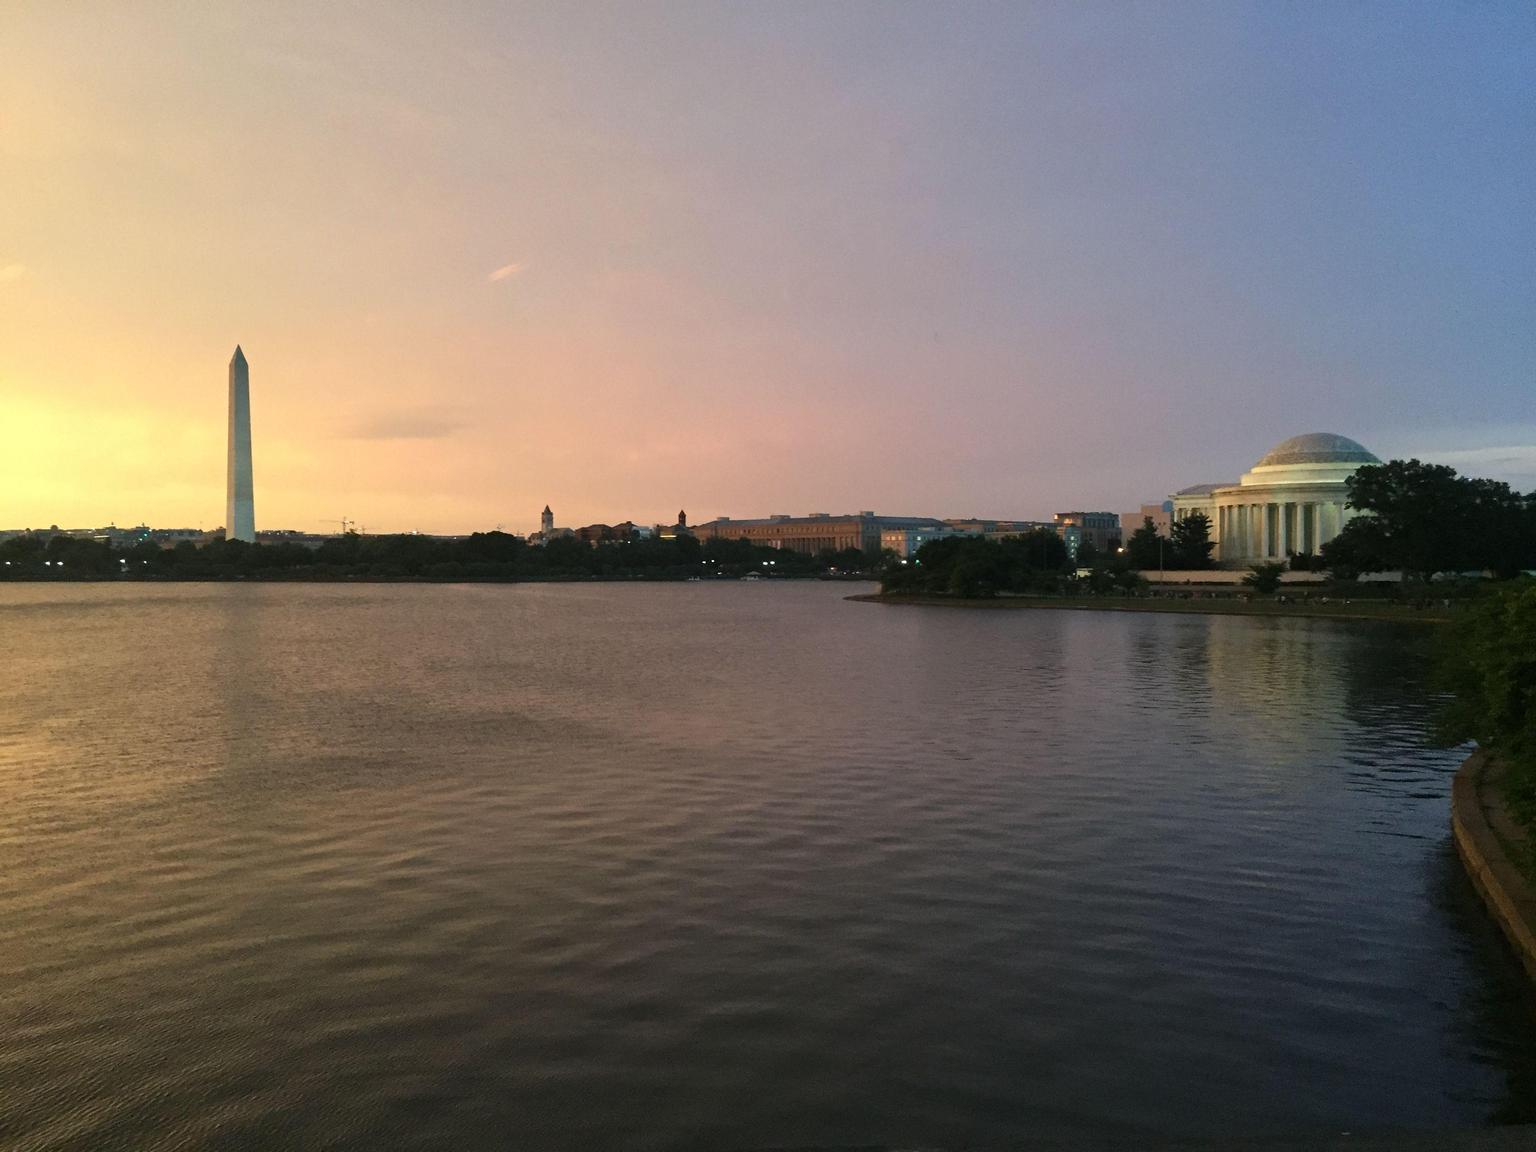 Washington DC Monuments by Moonlight